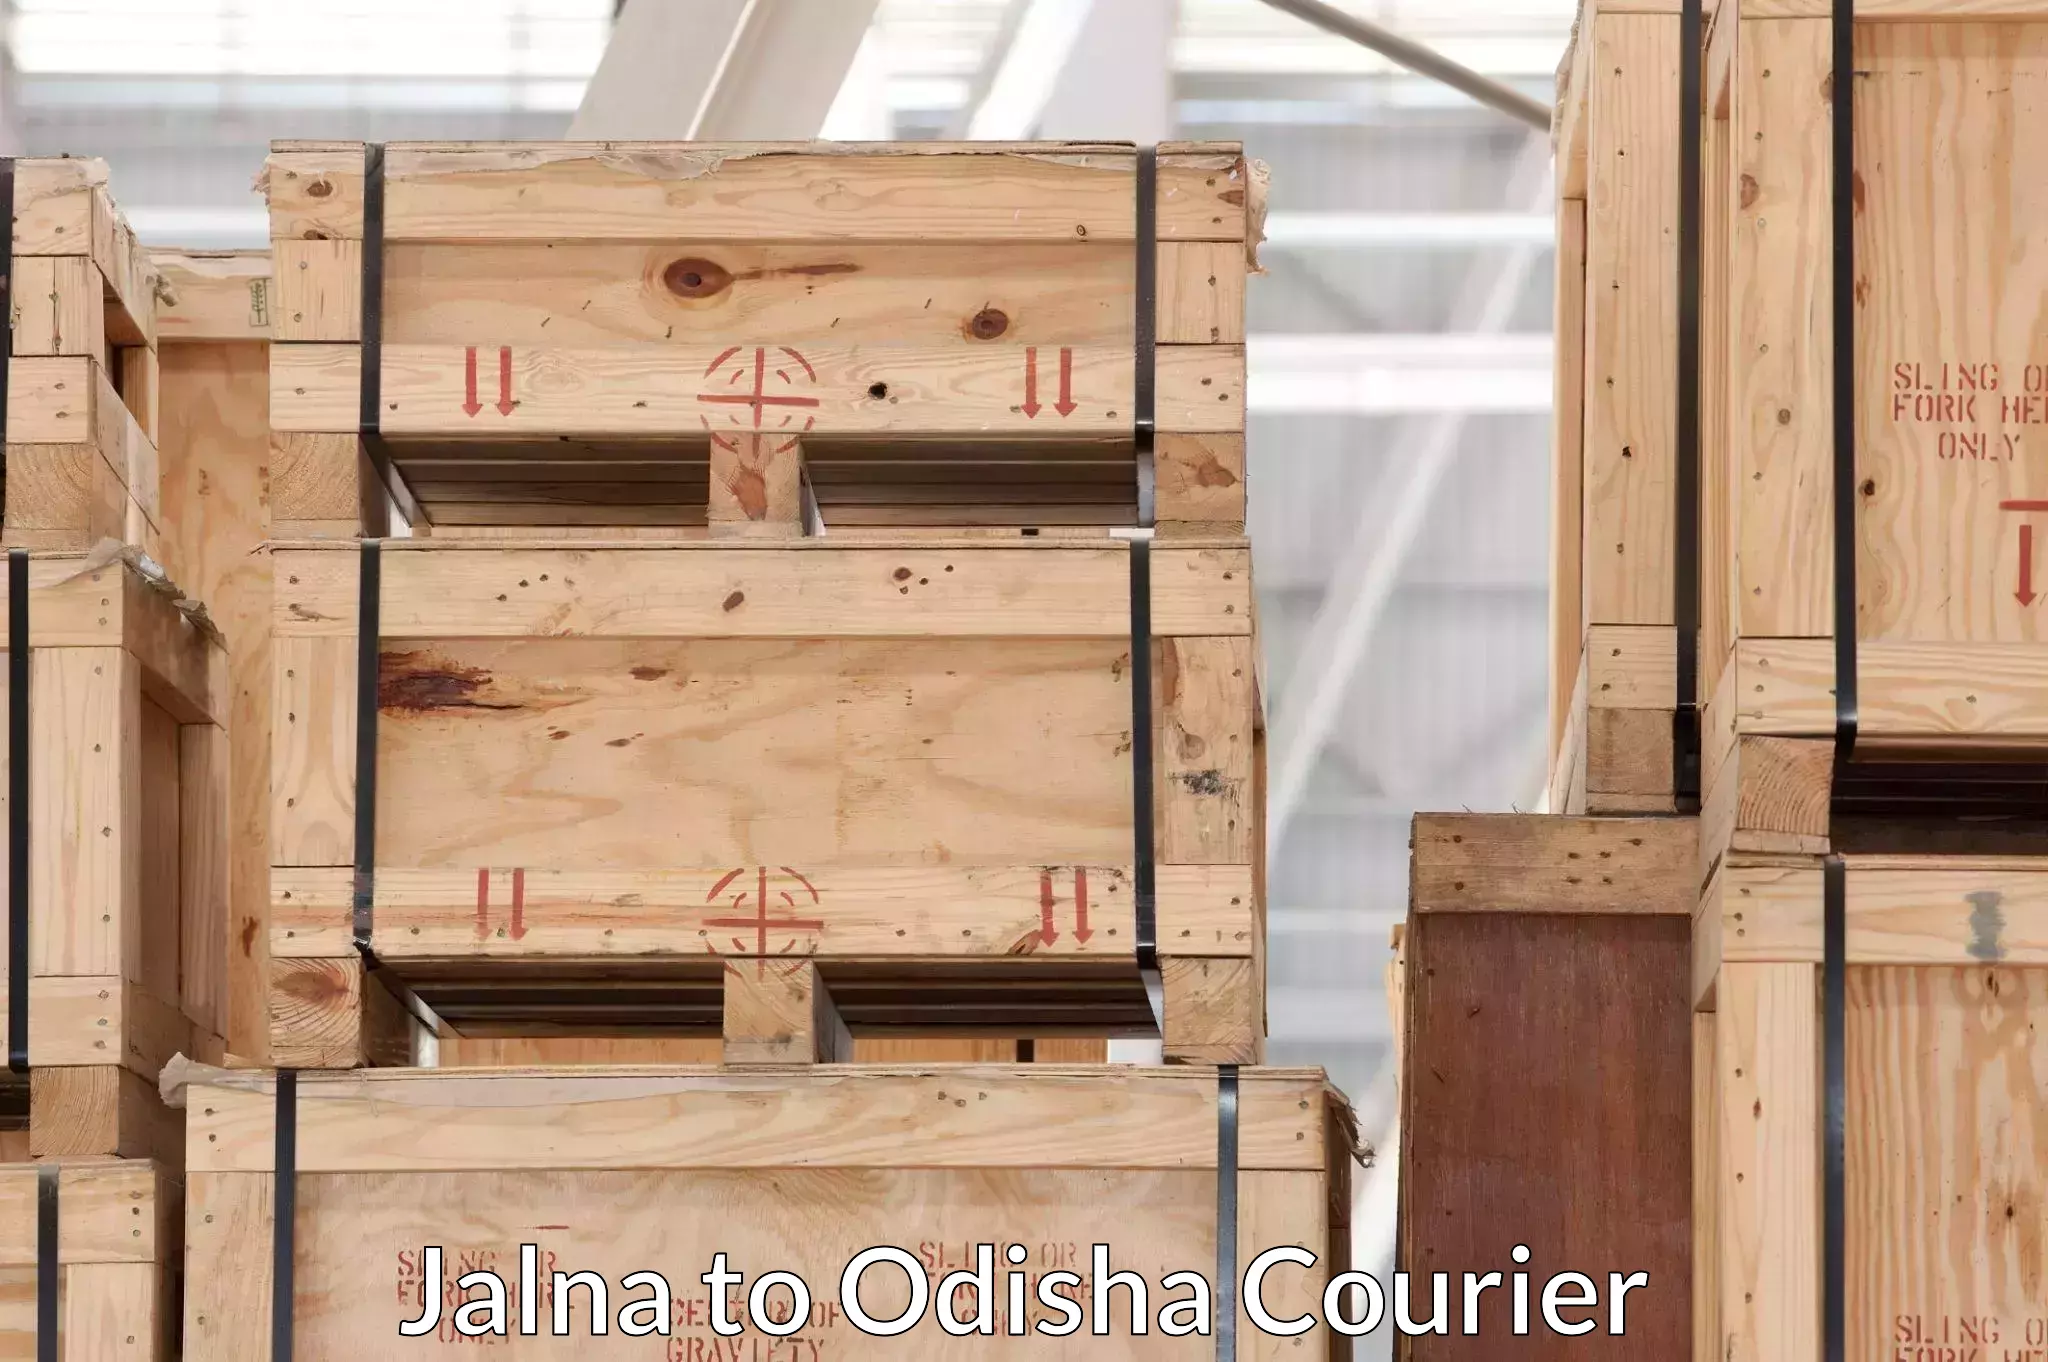 Professional packing services Jalna to Odisha